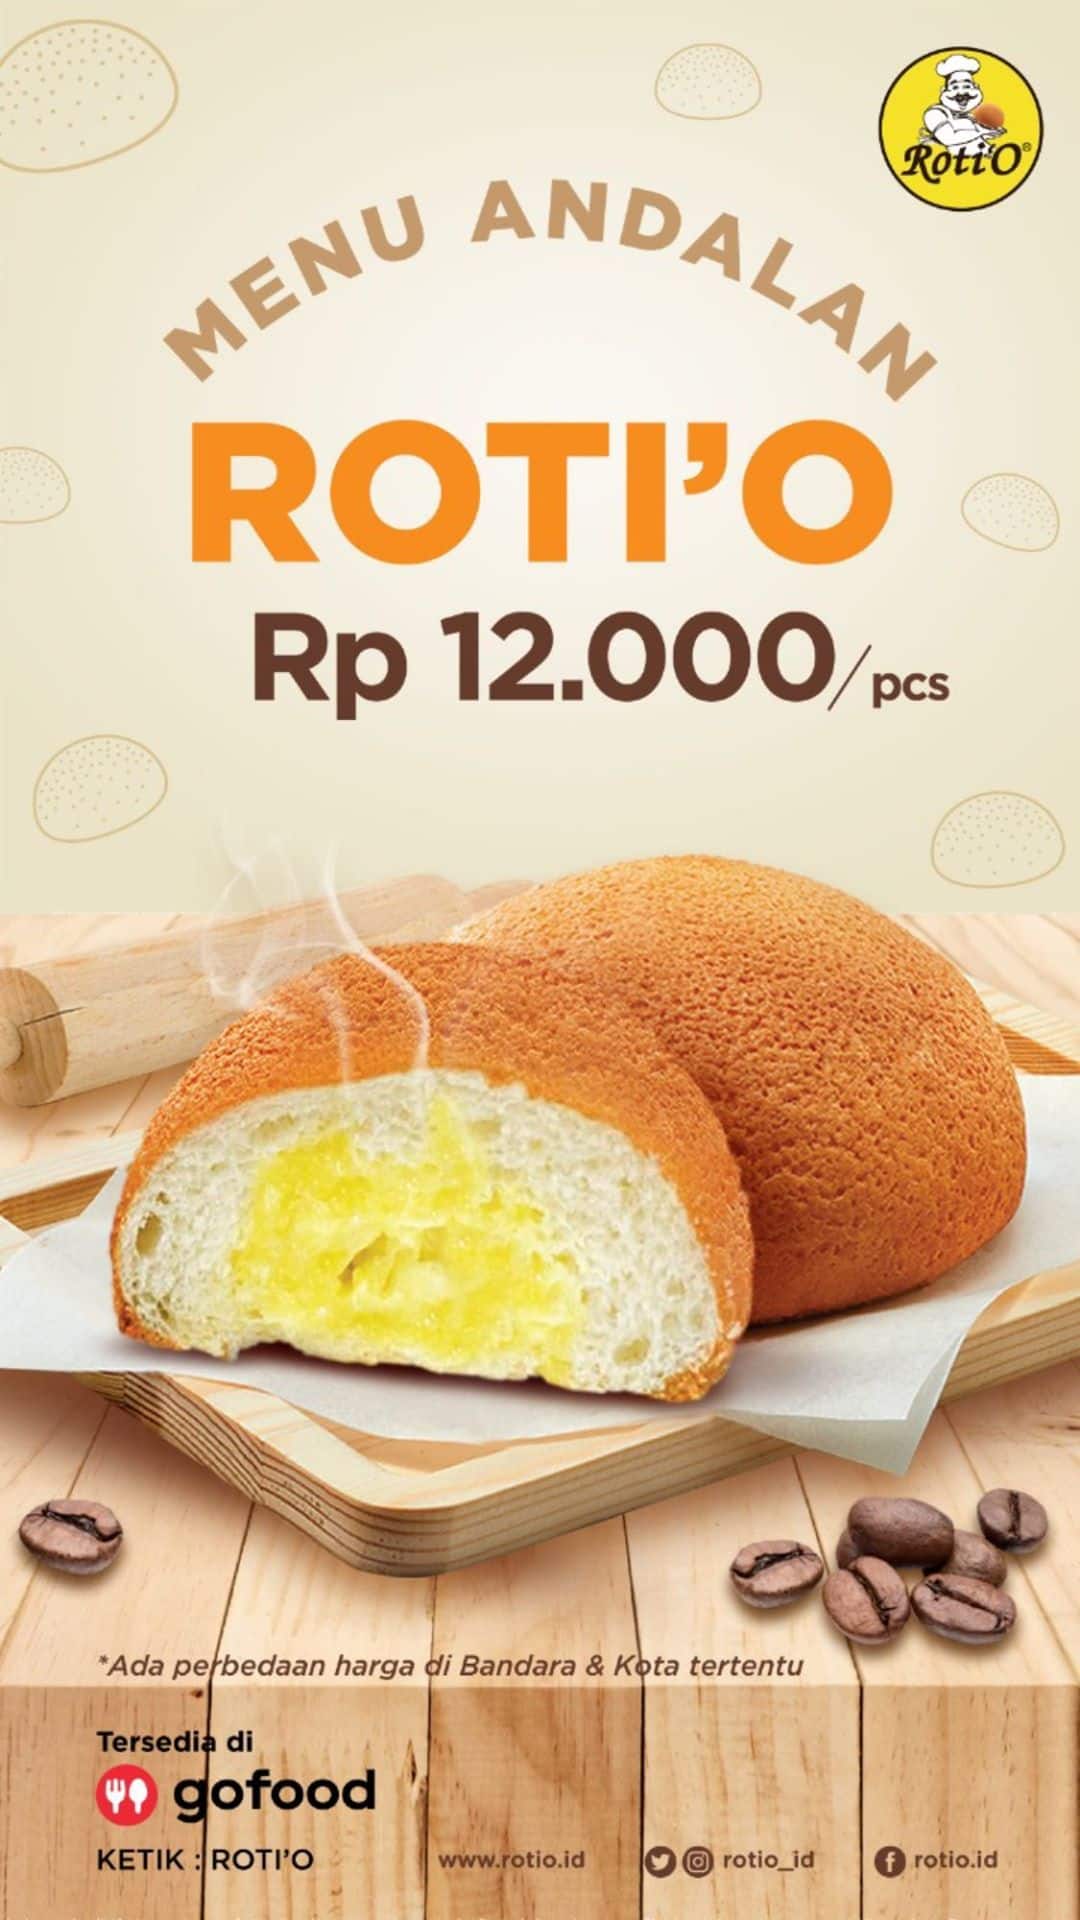 Roti O Menu Menu For Roti O Thamrin Jakarta